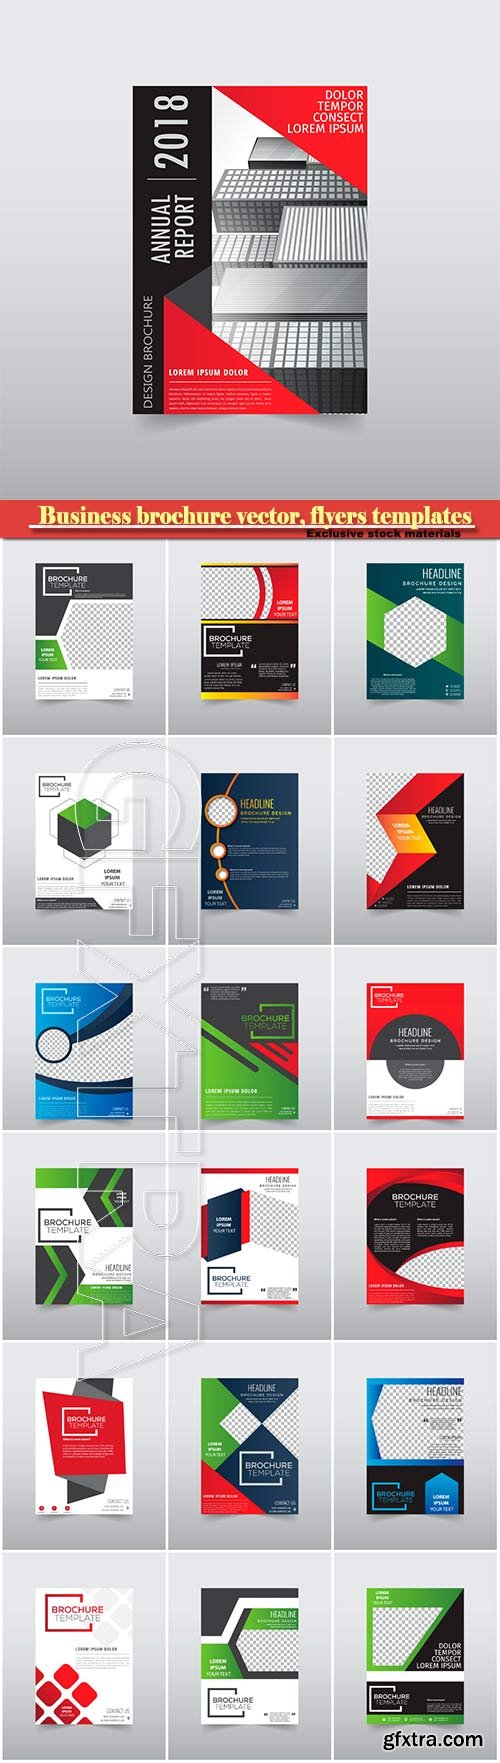 Business brochure vector, flyers templates # 29